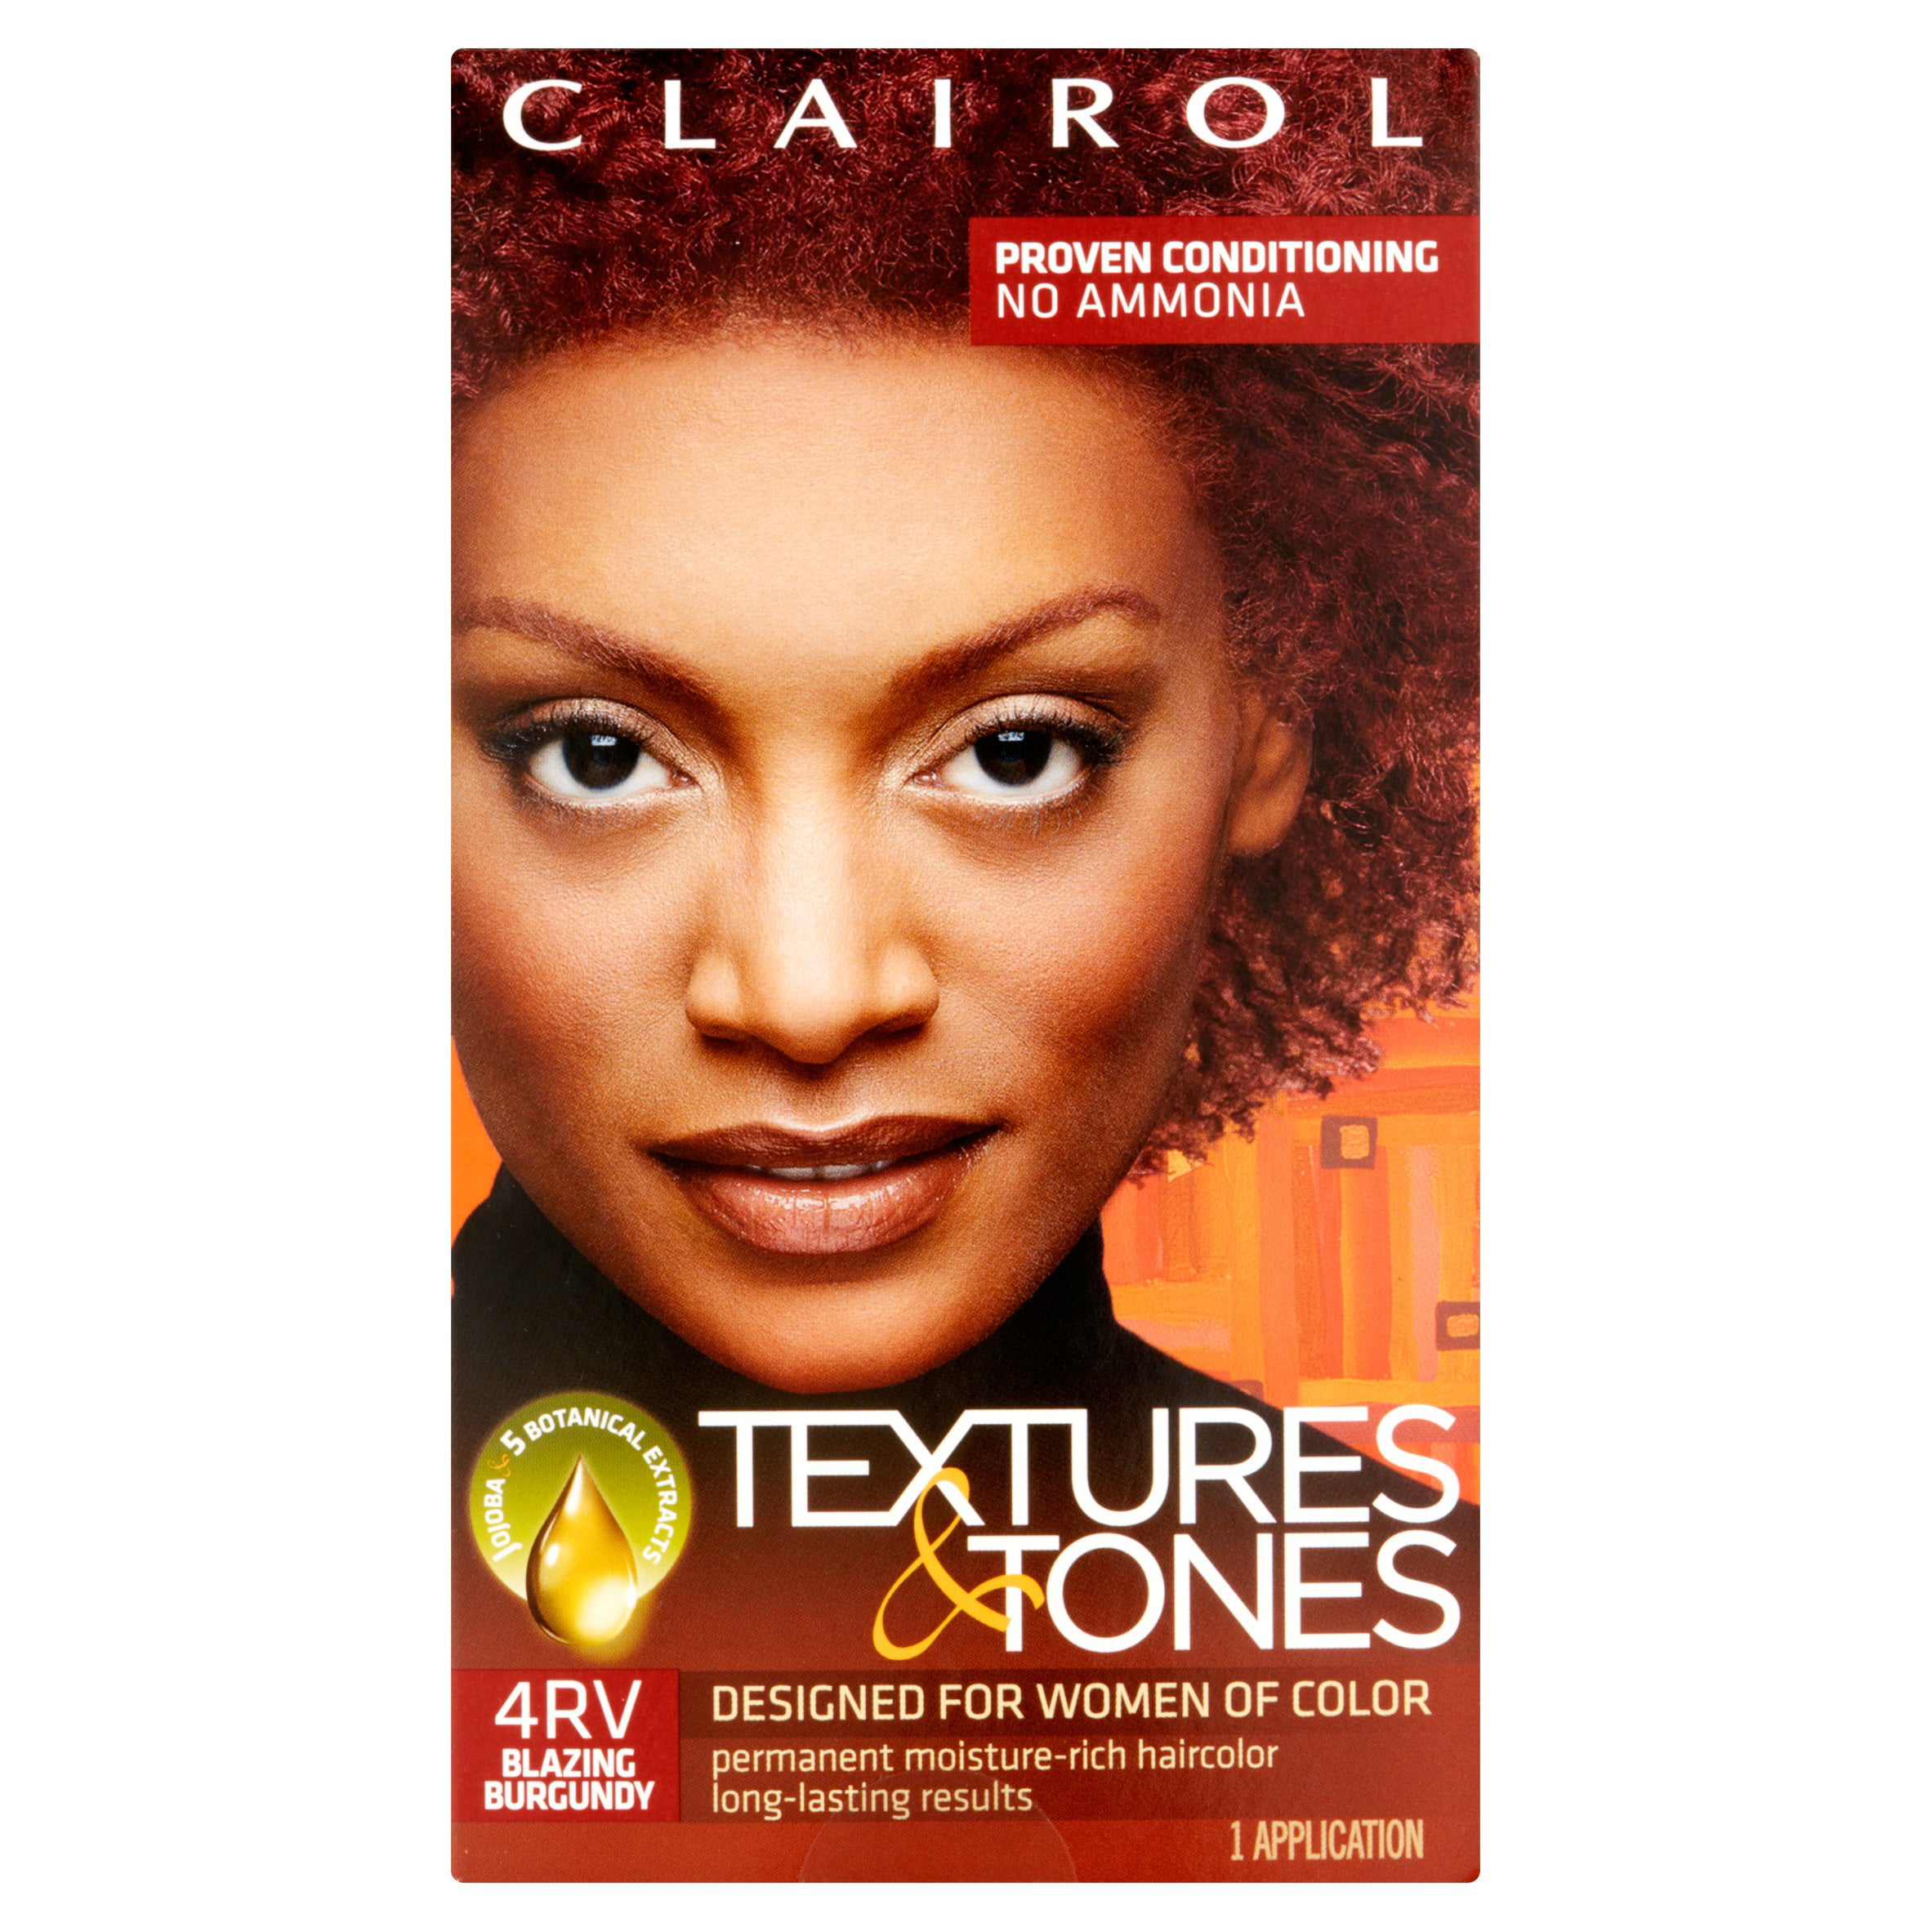 Clairol Textures & Tones 4RV Blazing Burgundy Permanent Moisture-Rich